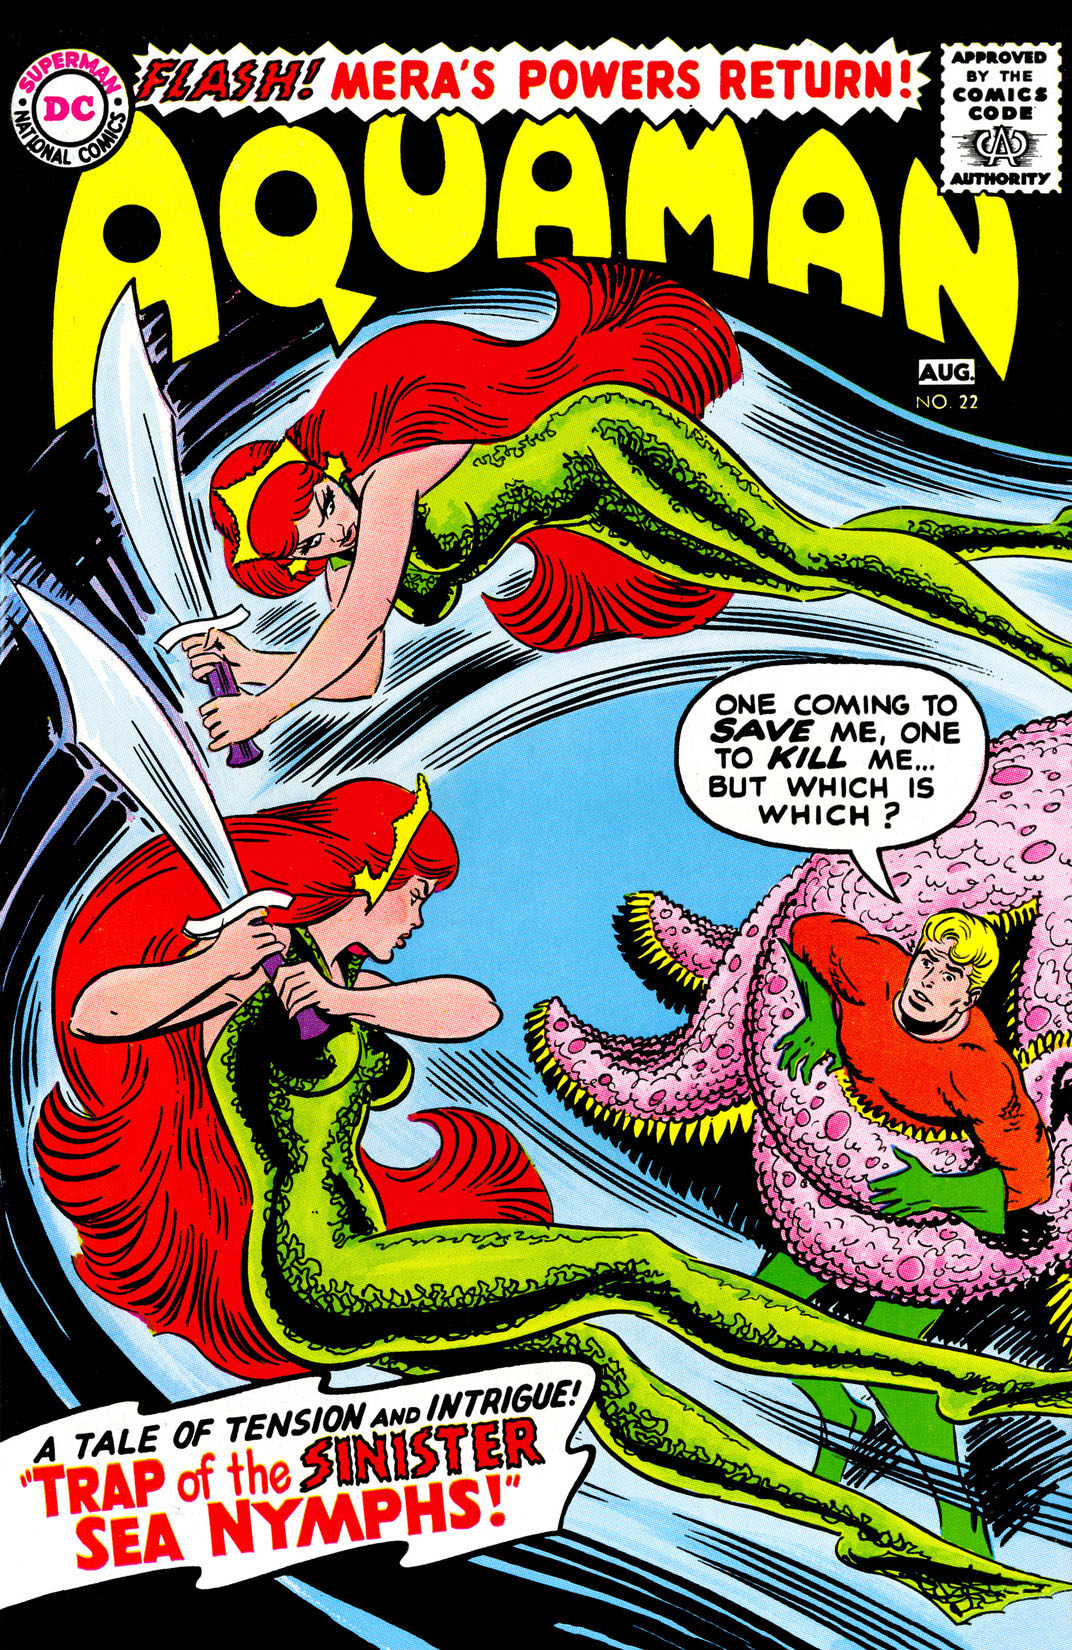 Aquaman (1962-) #22 preview images